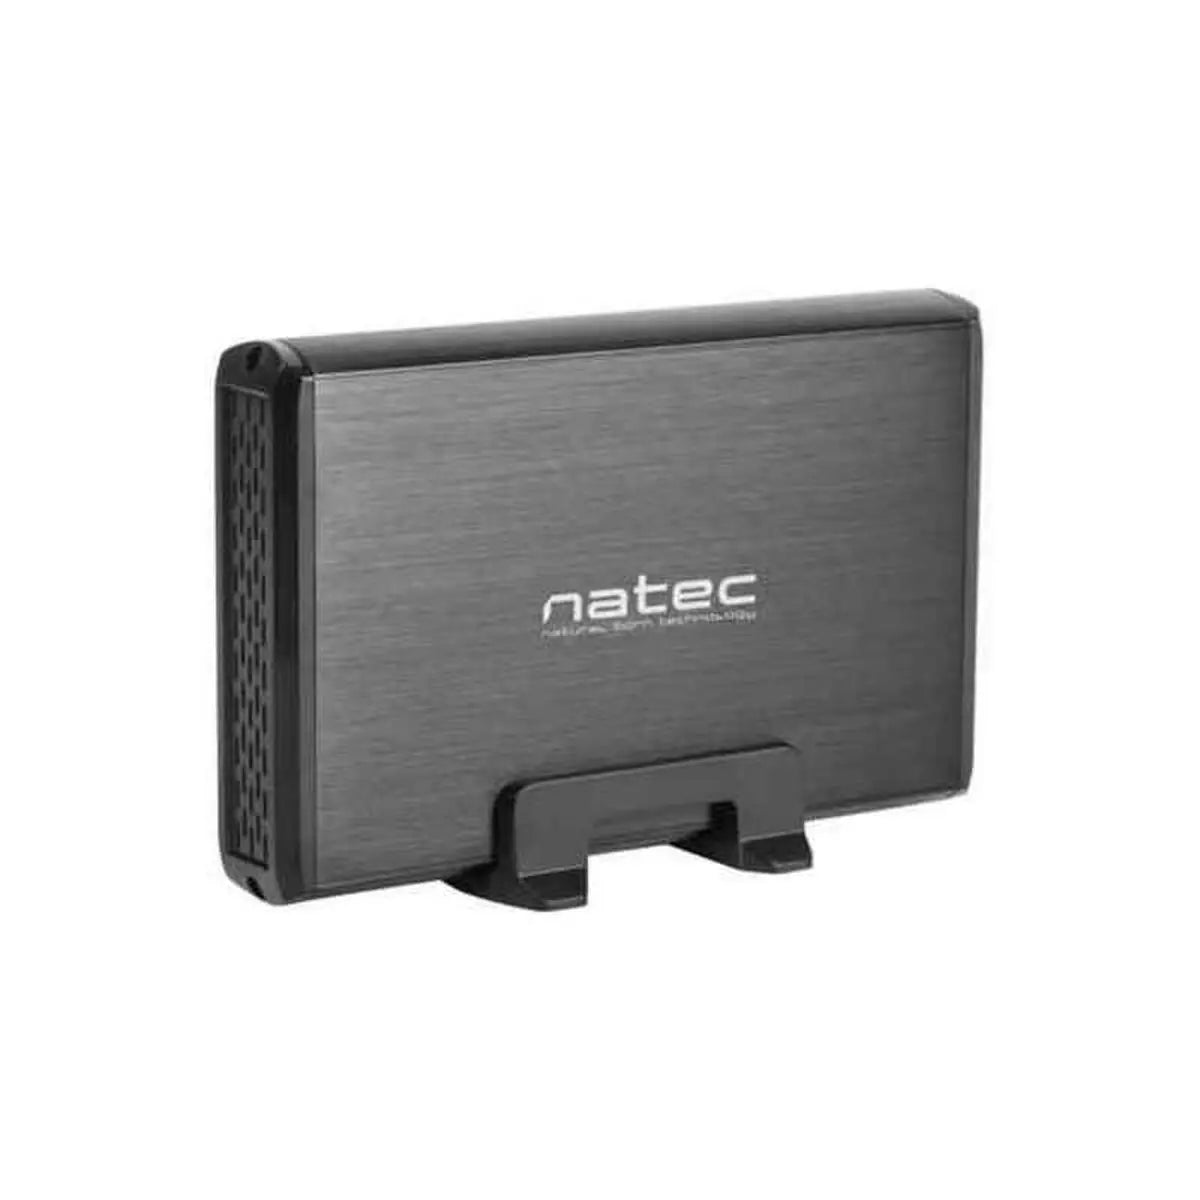 Hard drive case Natec RHINO 3,5" USB 3.2 Gen 1 5 Gbps Black